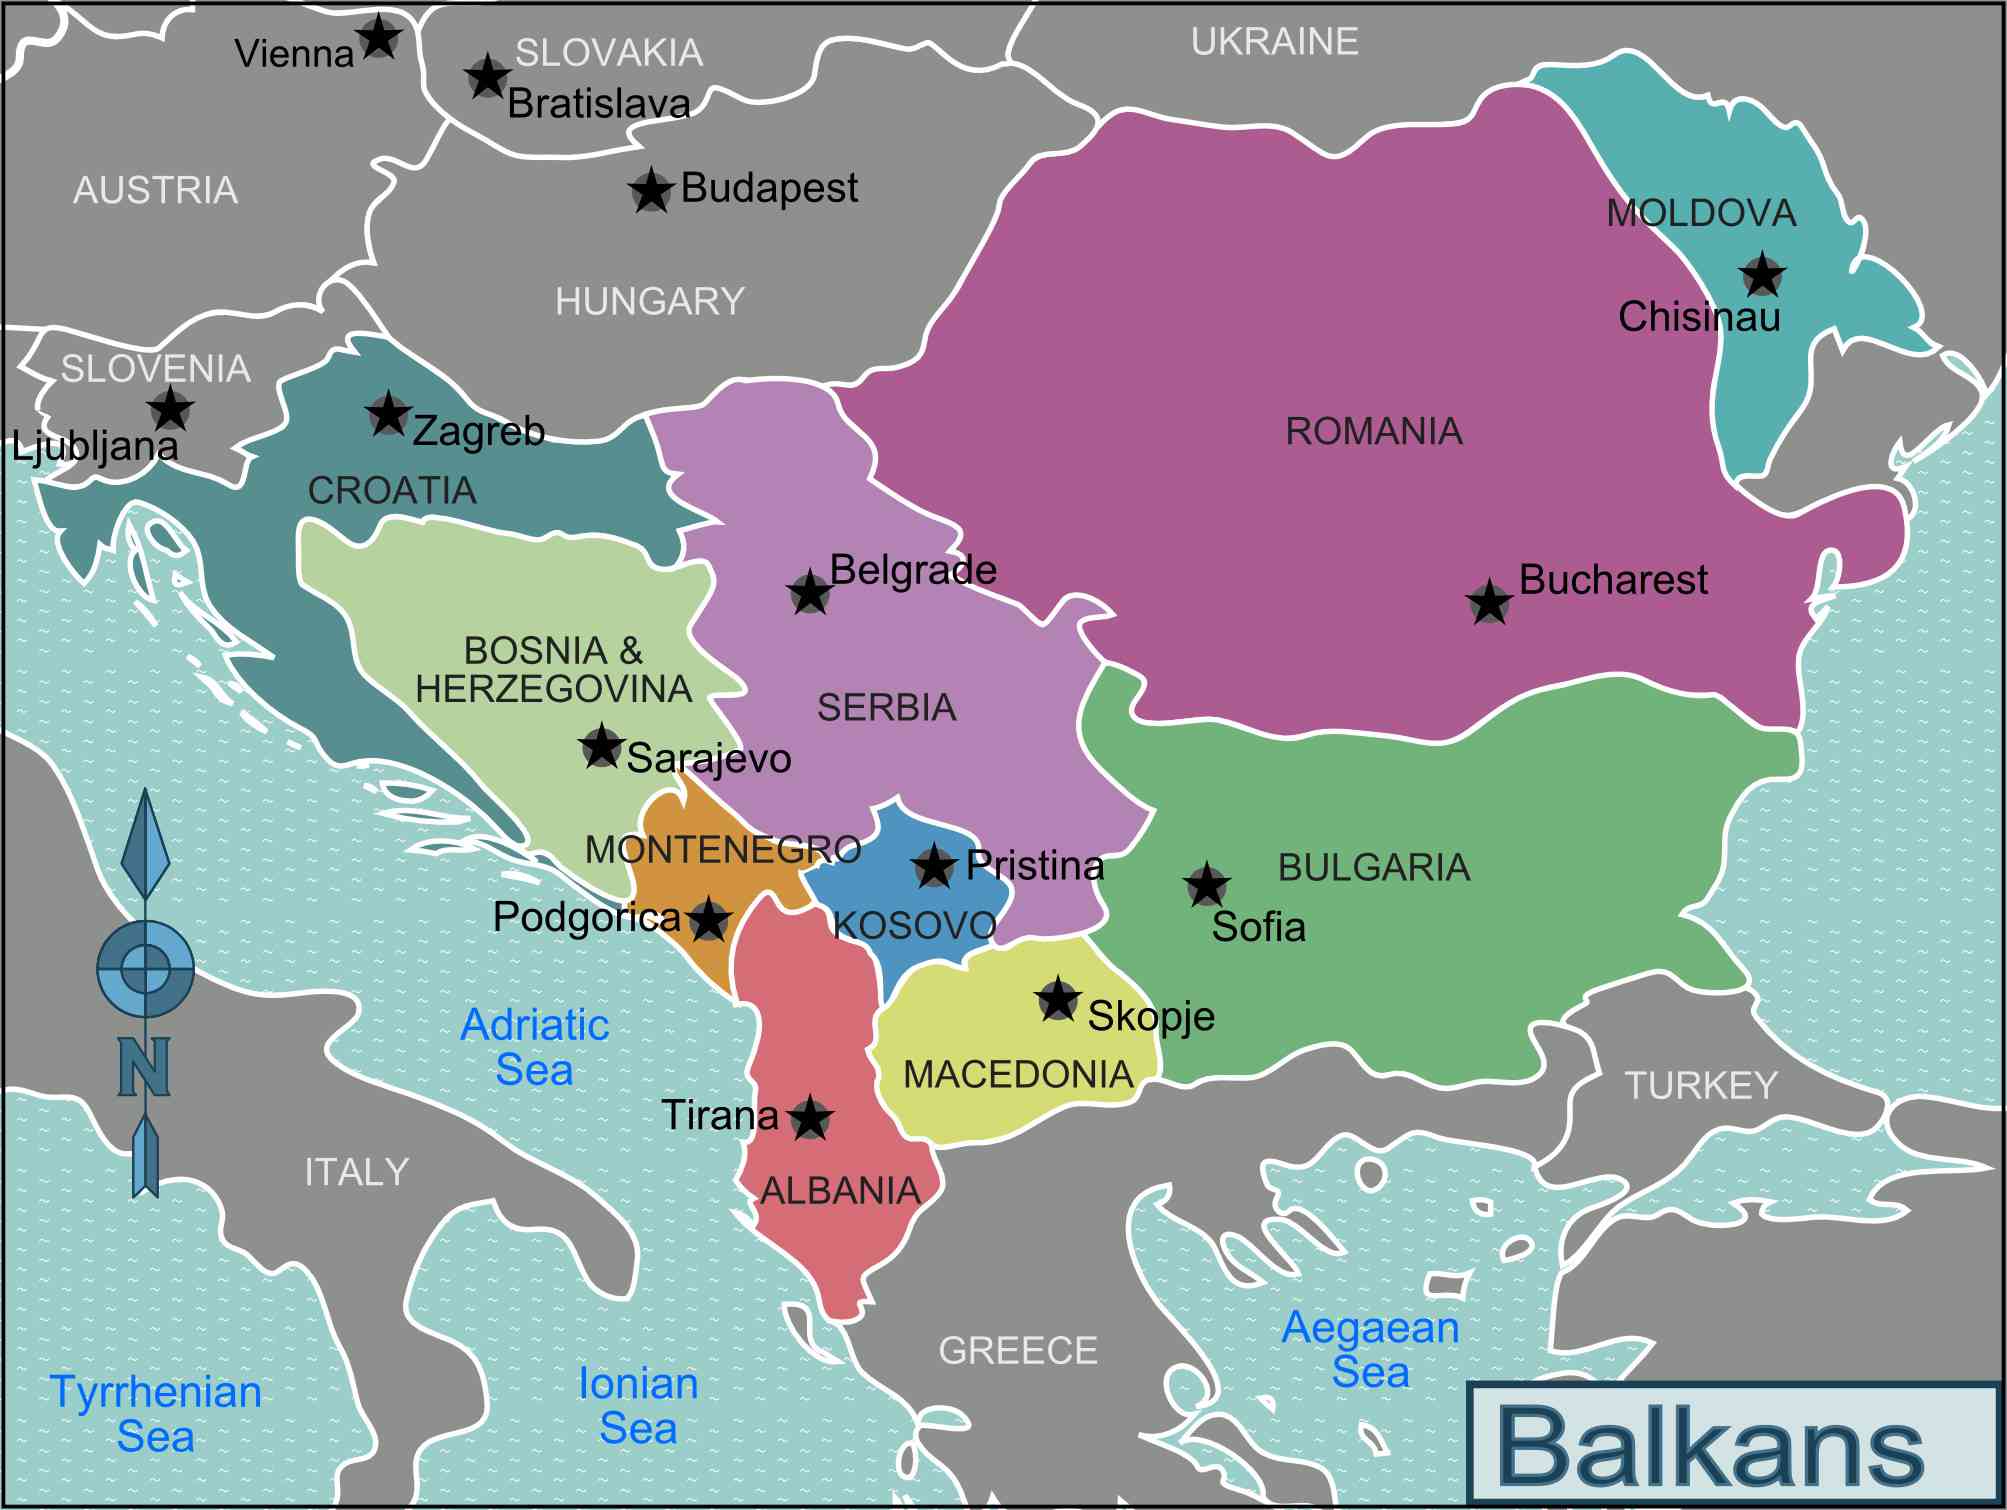 Balkan states